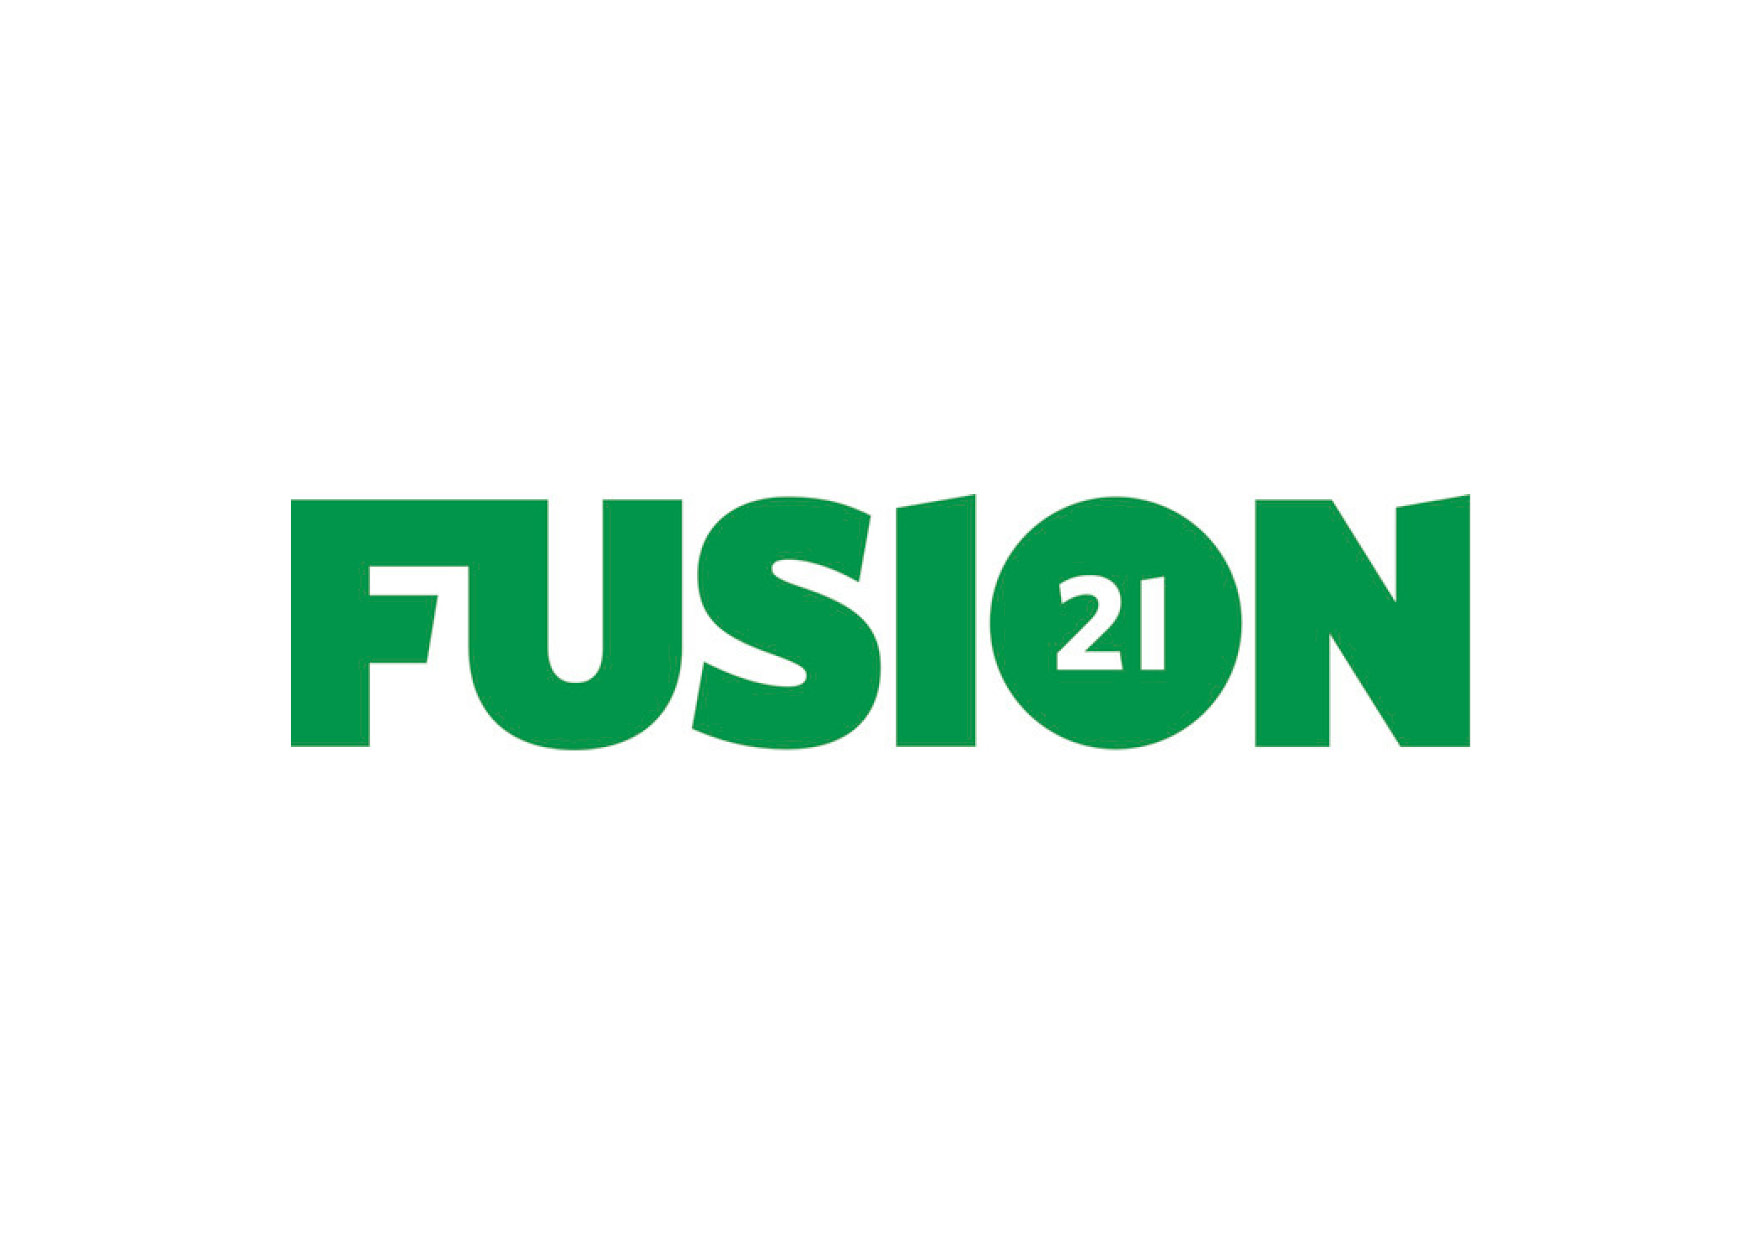 Fusion21 Decarbonisation Framework